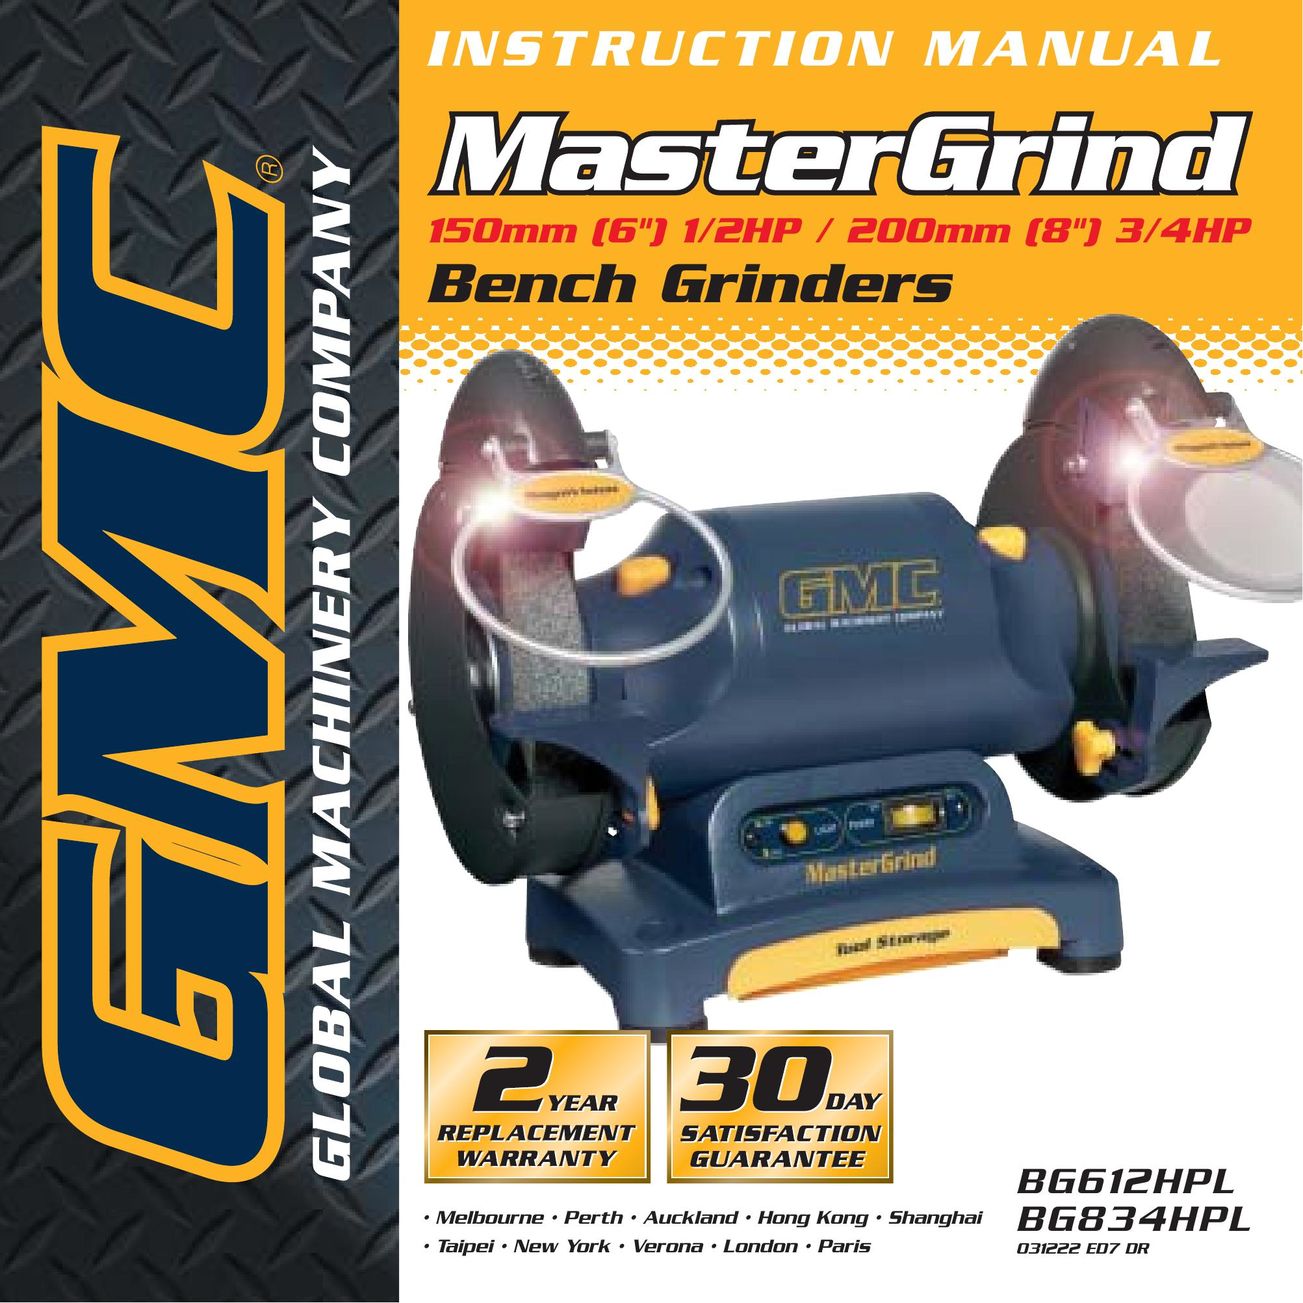 Global Machinery Company BG834HPL Grinder User Manual